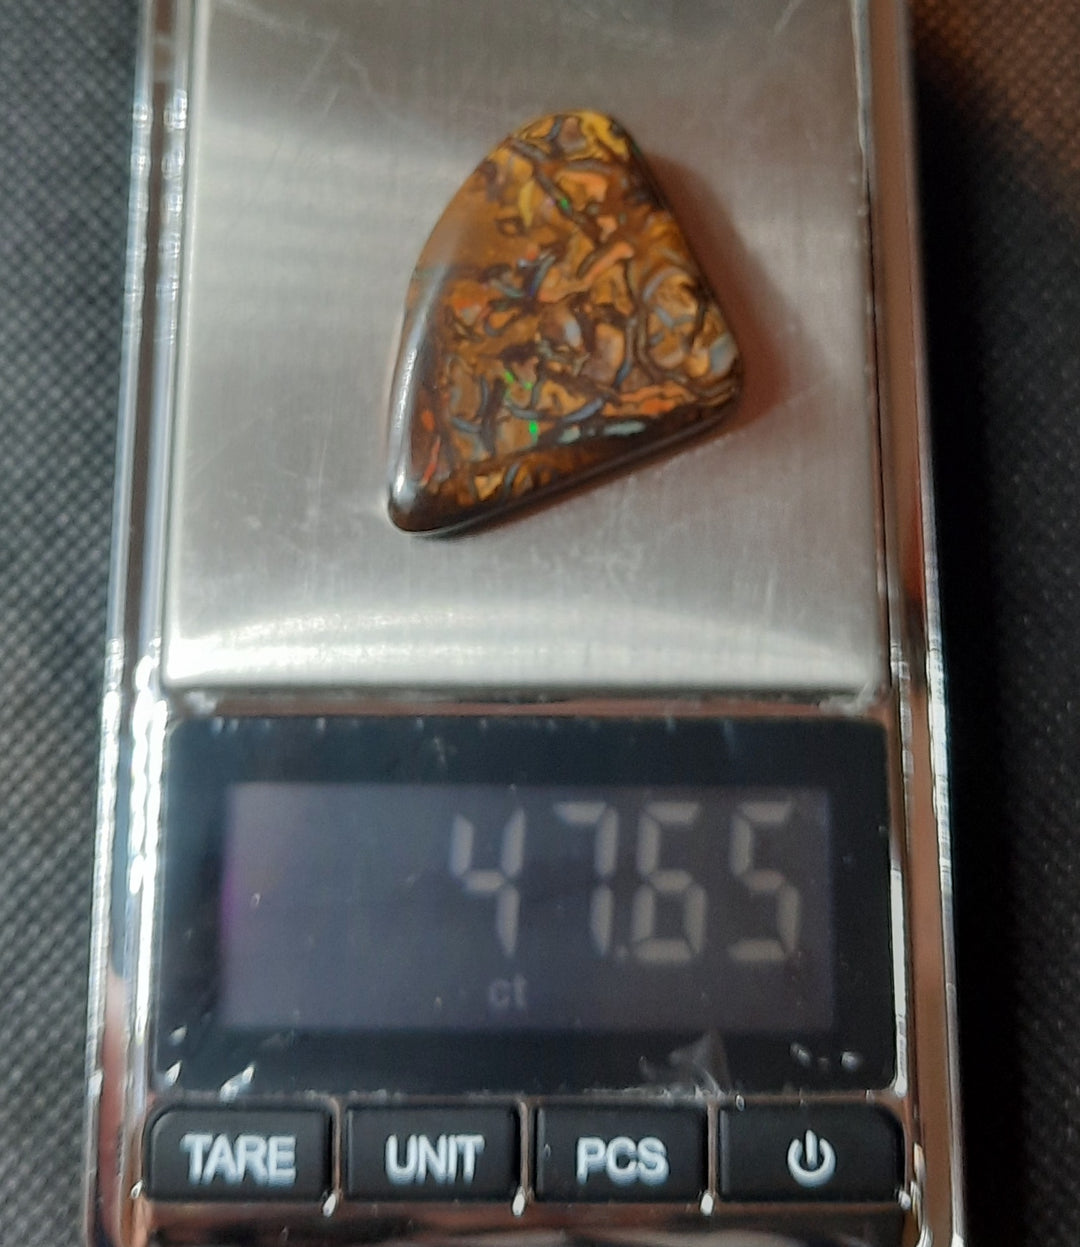 Australian Boulder Opal OPL112